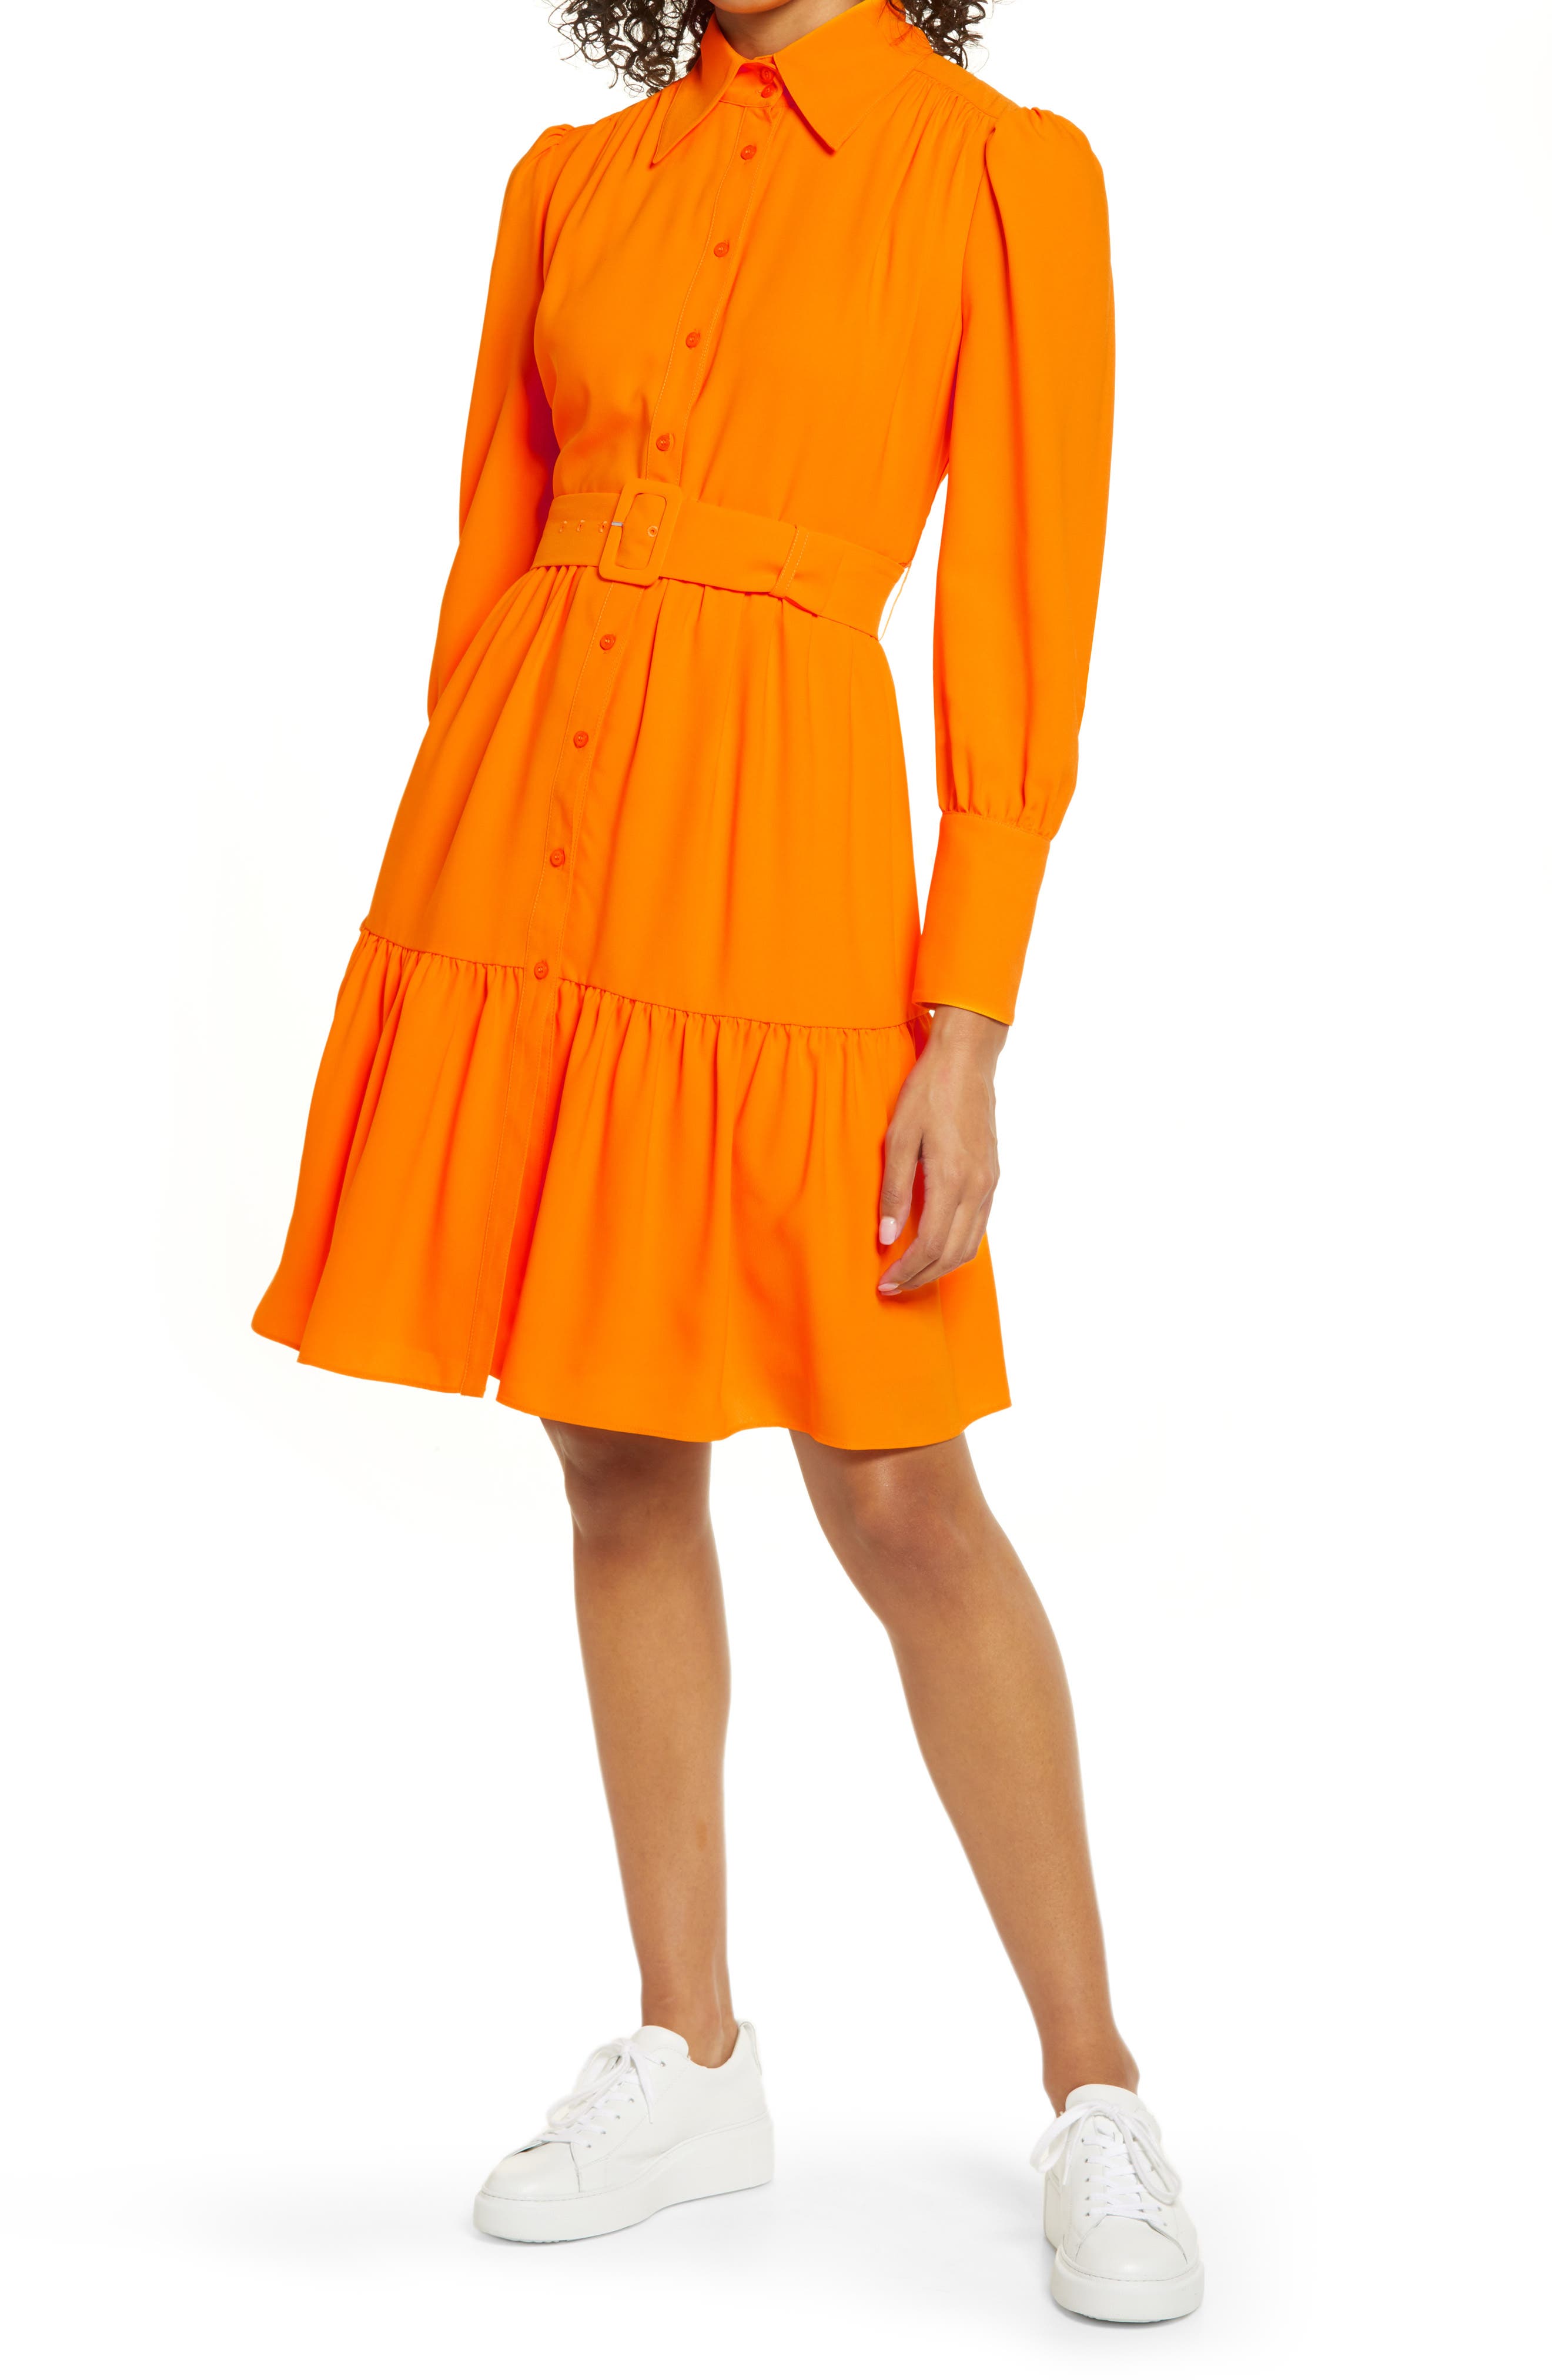 and orange dress